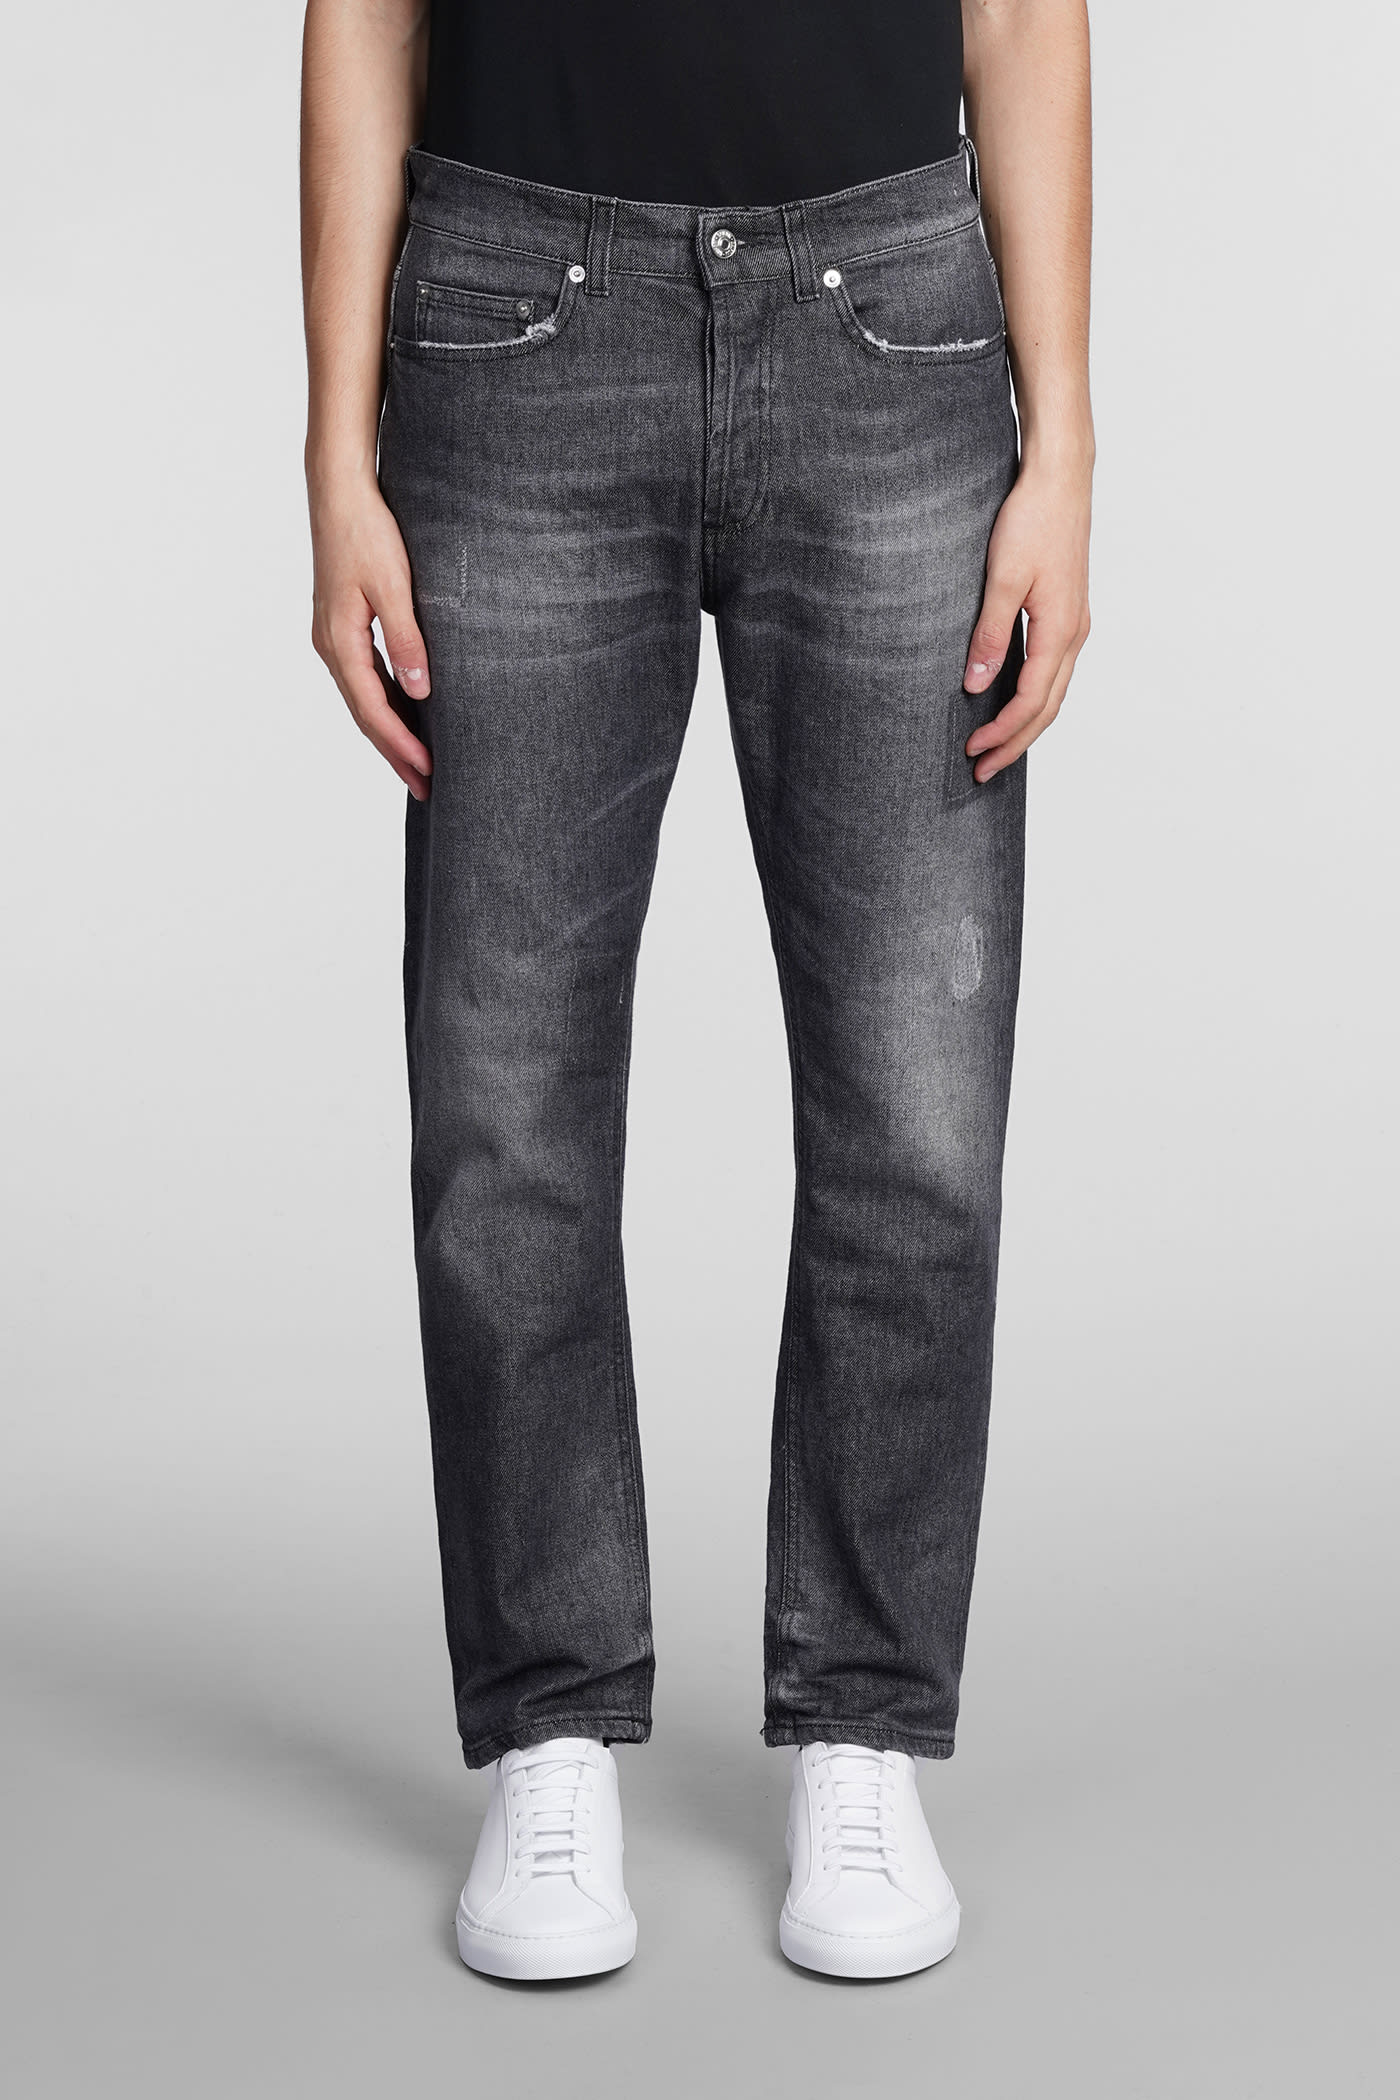 Mauro Grifoni Jeans In Grey Denim